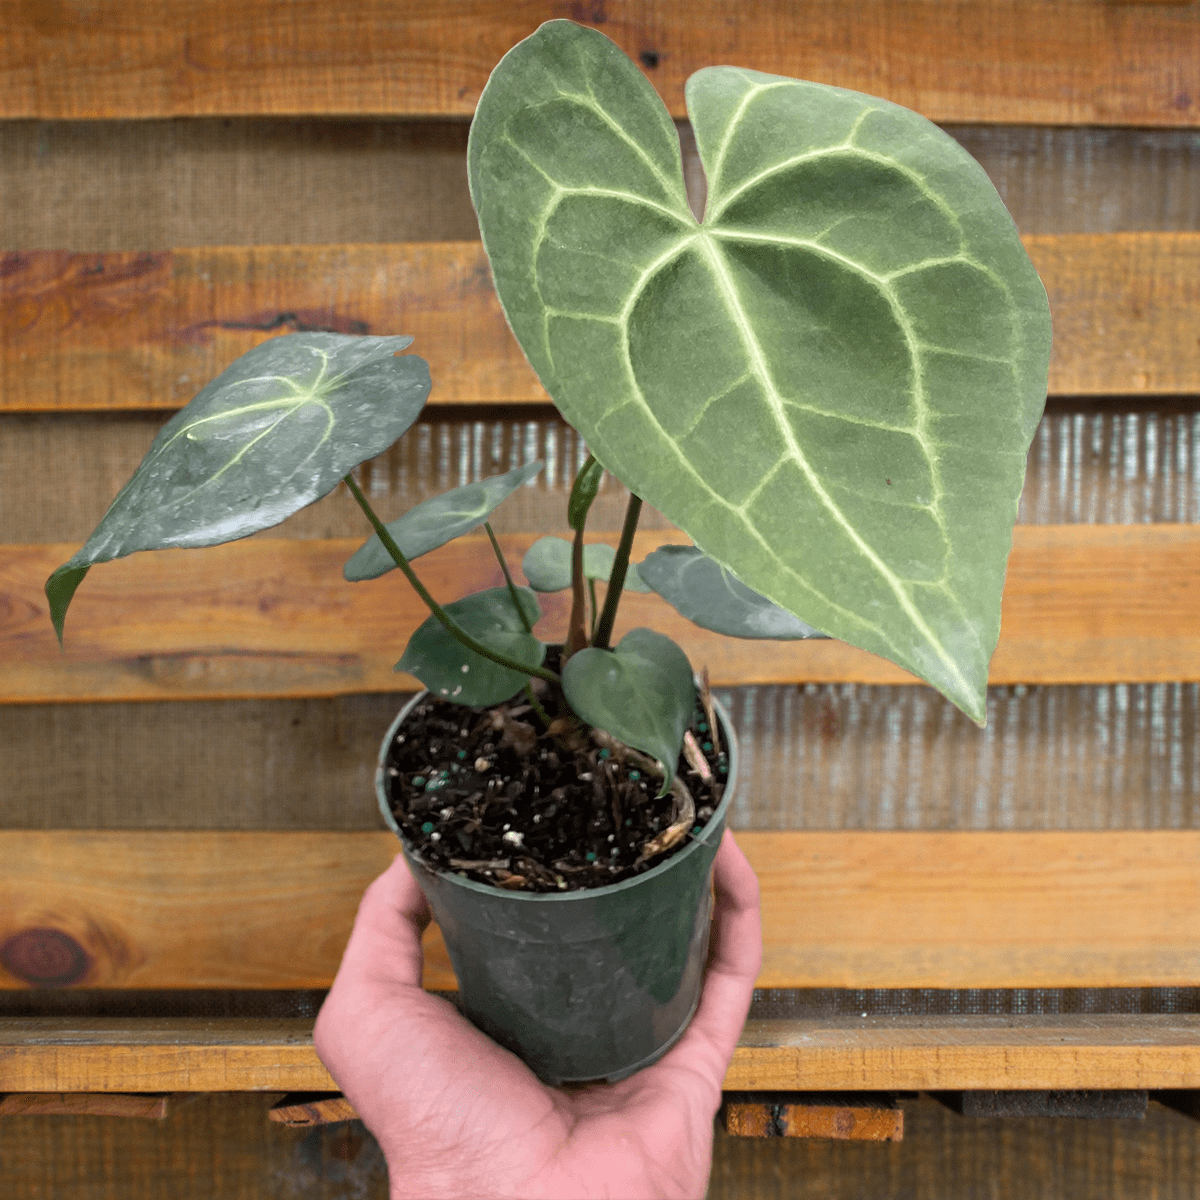 Anthurium Pterodactyl - plants for sale | house plant sale | Forget Me Not Flower Market online plant shop | online nurseries near to me